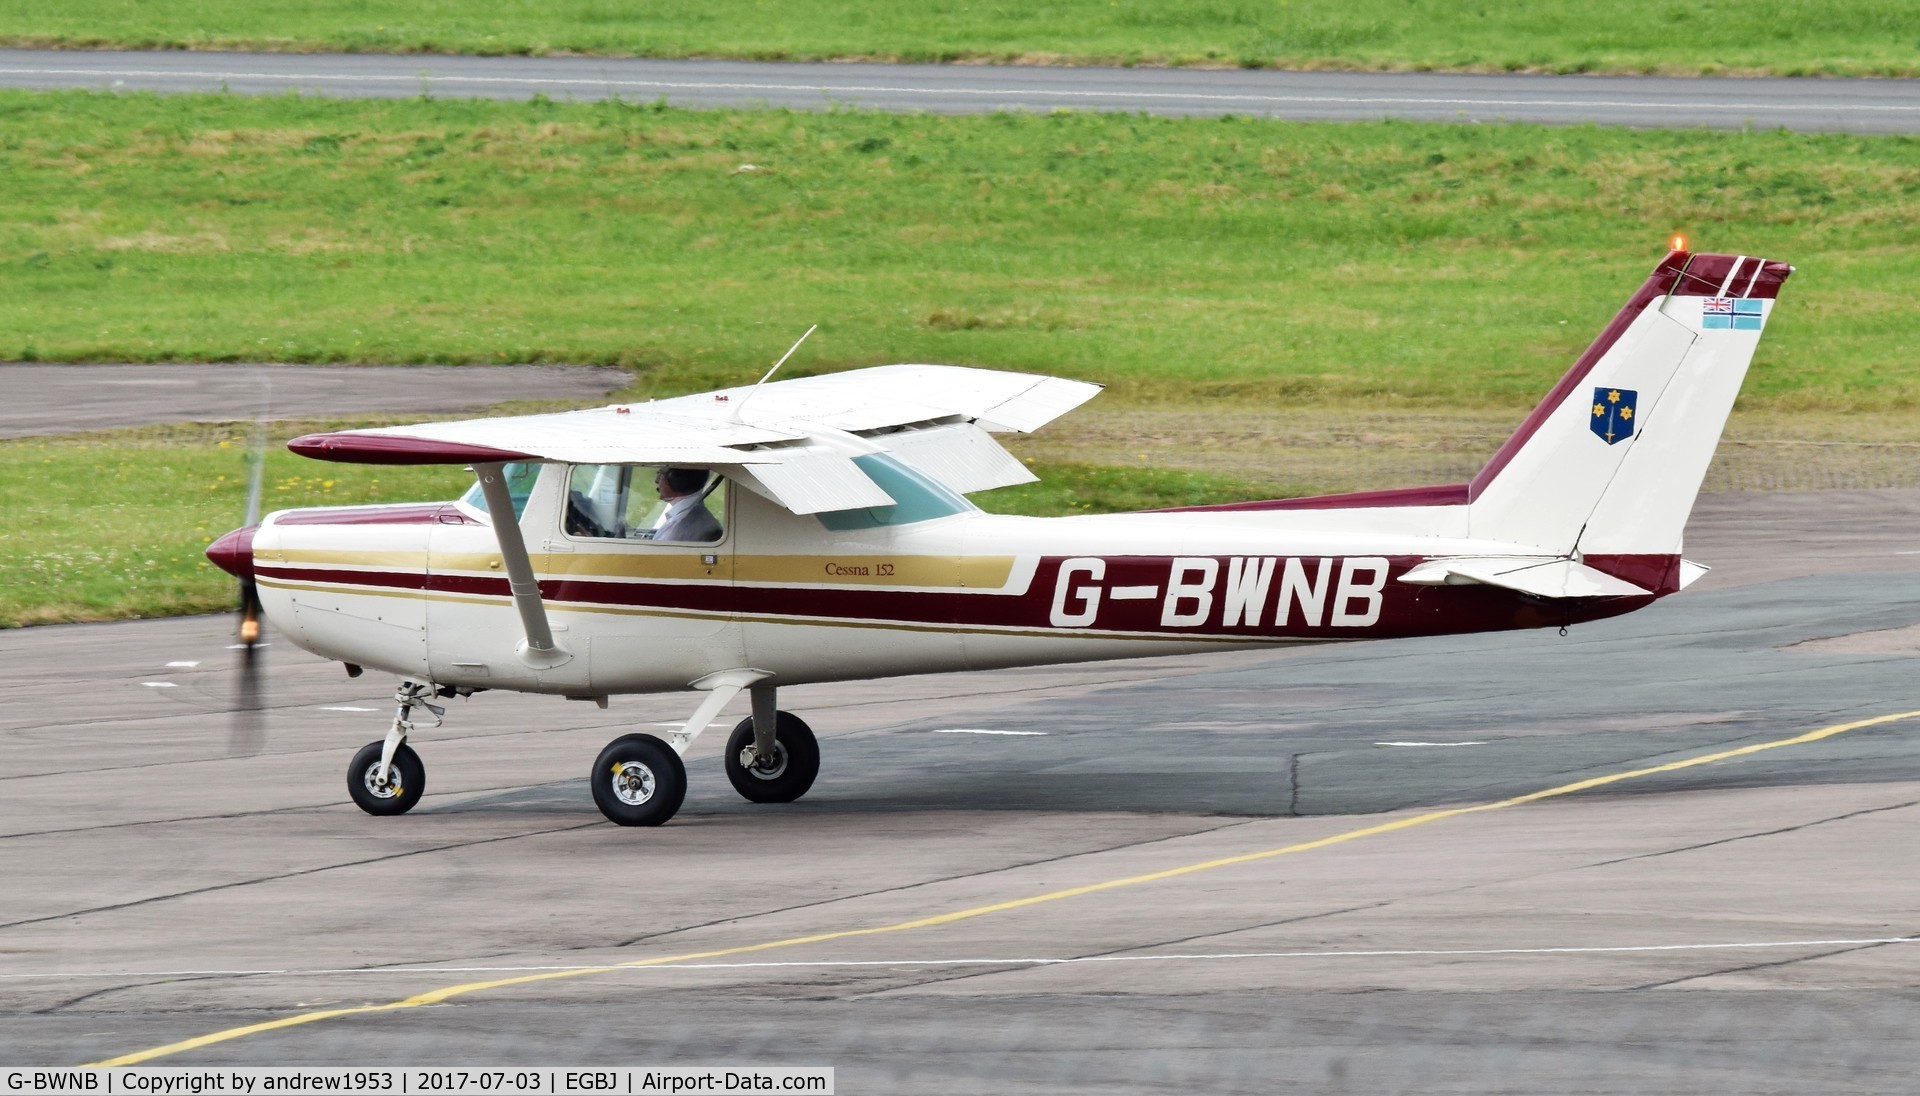 G-BWNB, 1978 Cessna 152 C/N 152-80051, G-BWNB at Gloucestershire Airport.